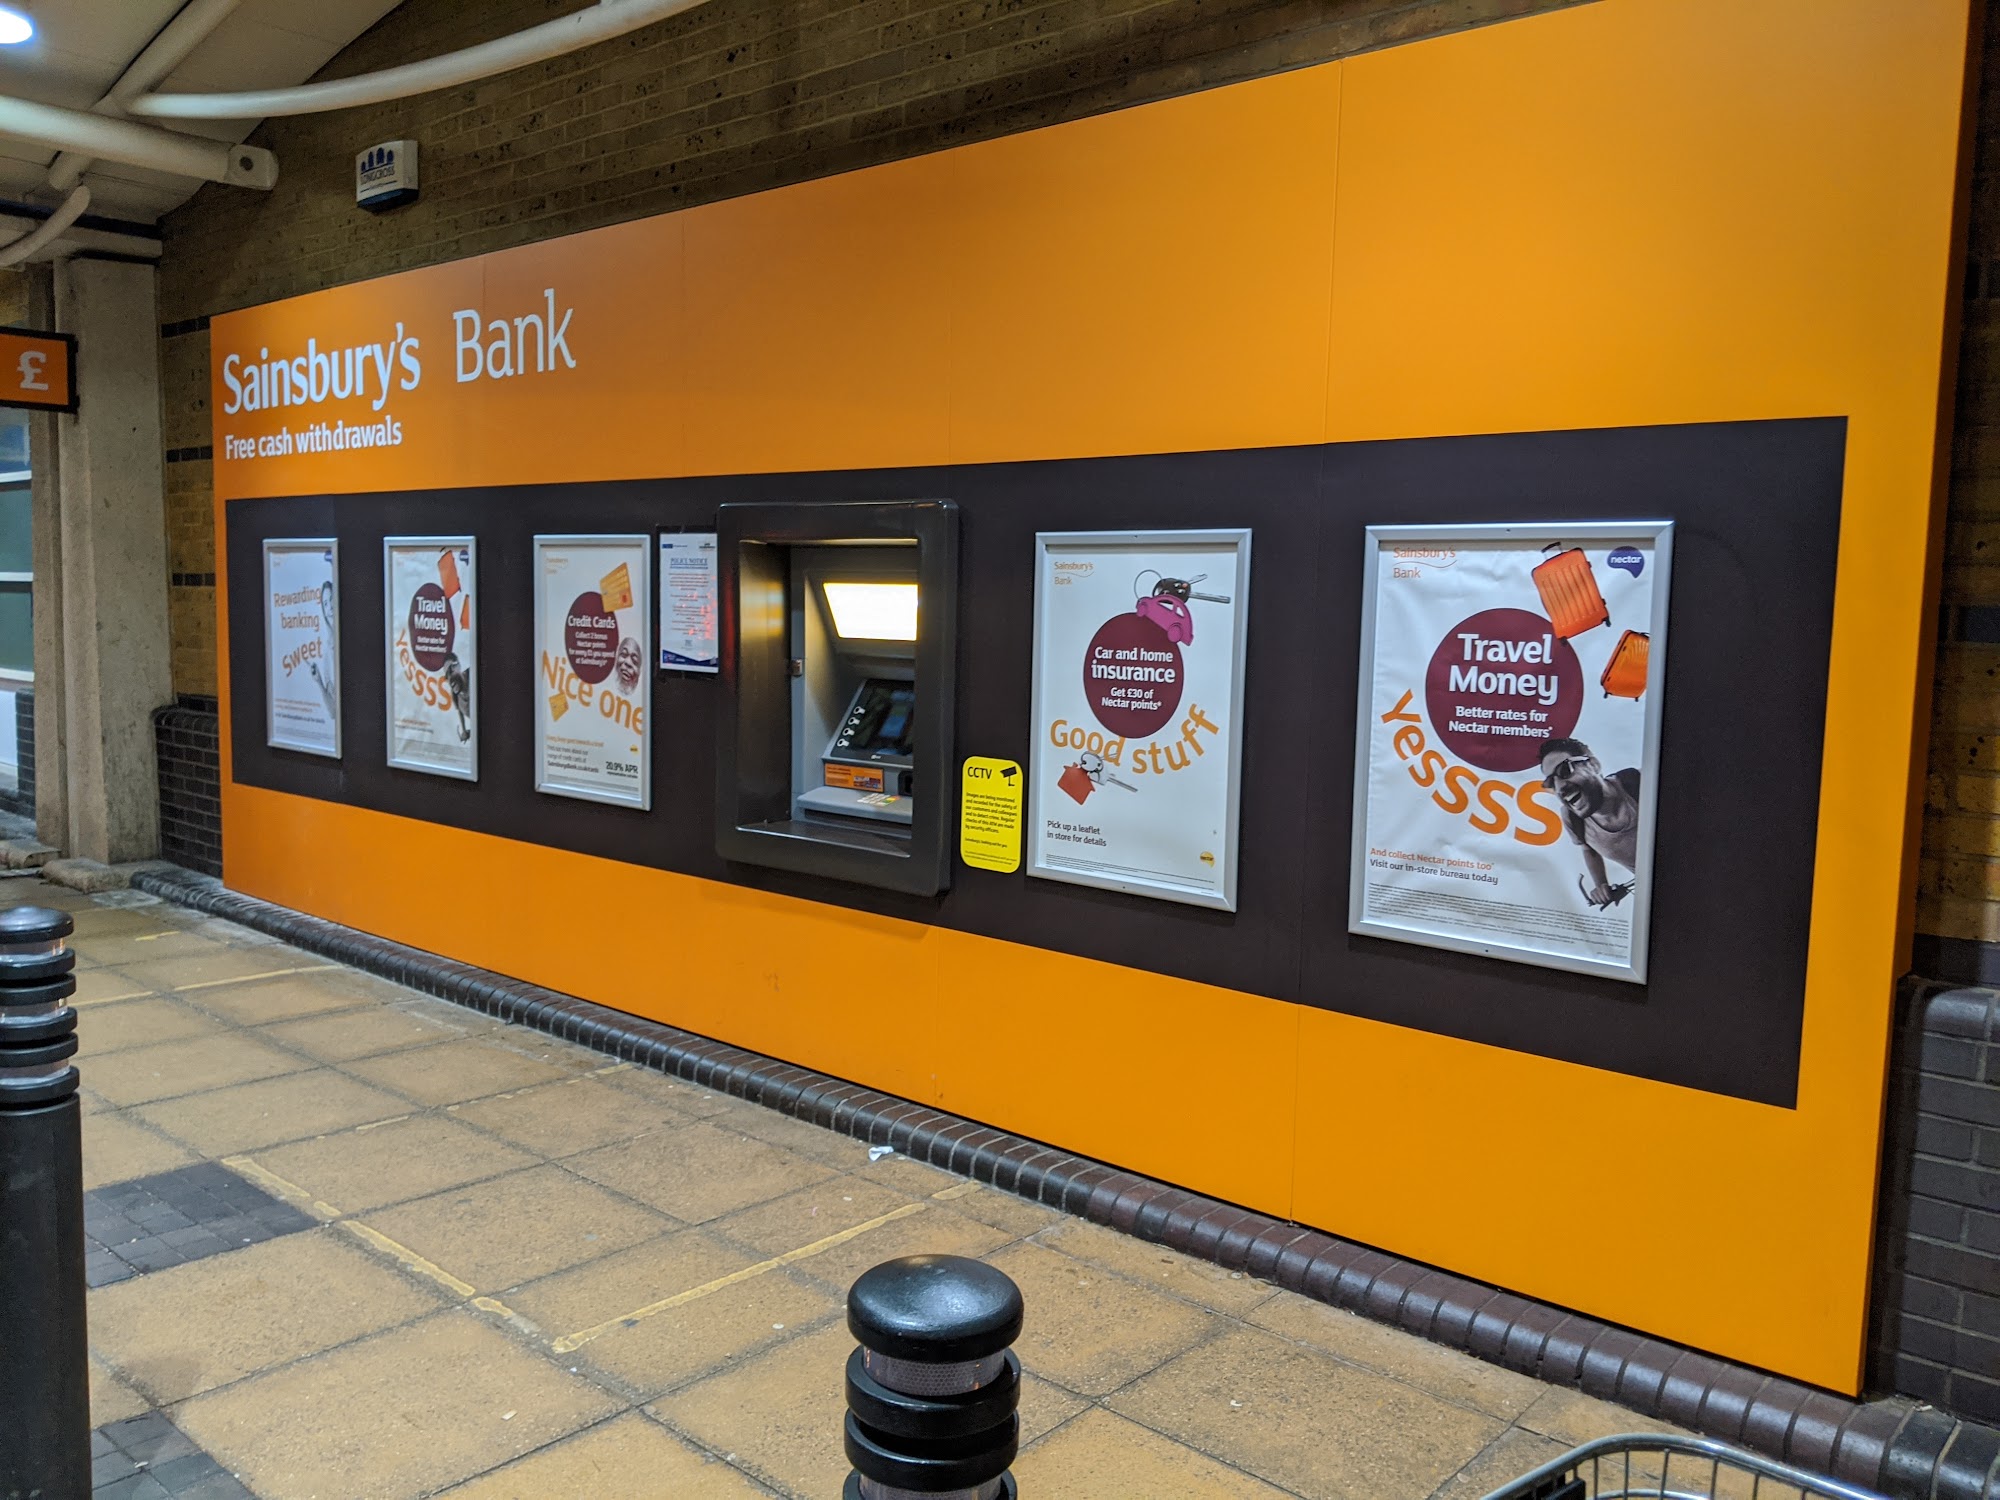 Sainsbury's Bank Travel Money